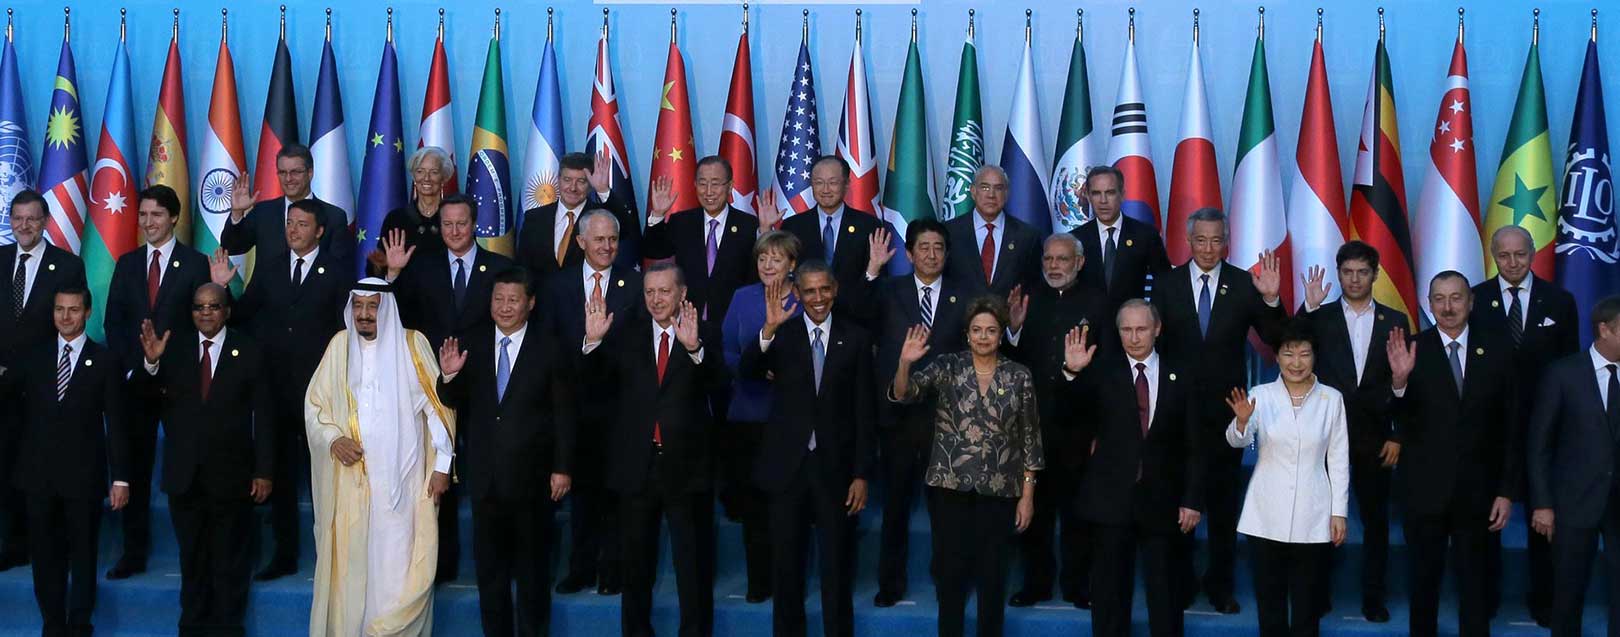 G20 nations agree to improve trade governance to halt slowdown